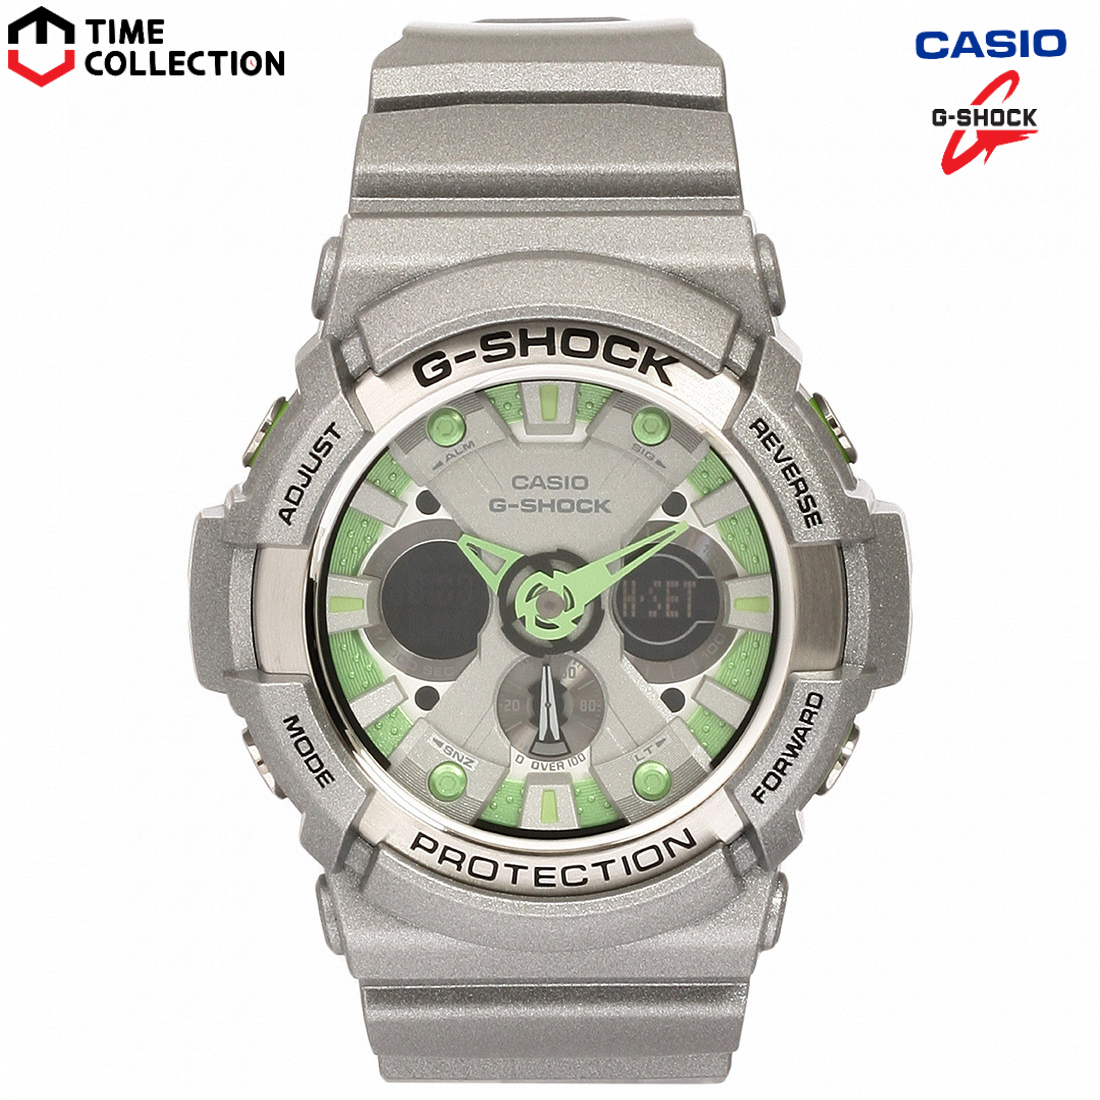 Casio G-shock Digital Analog GA-200SH-8A Watch for Men w/ 1